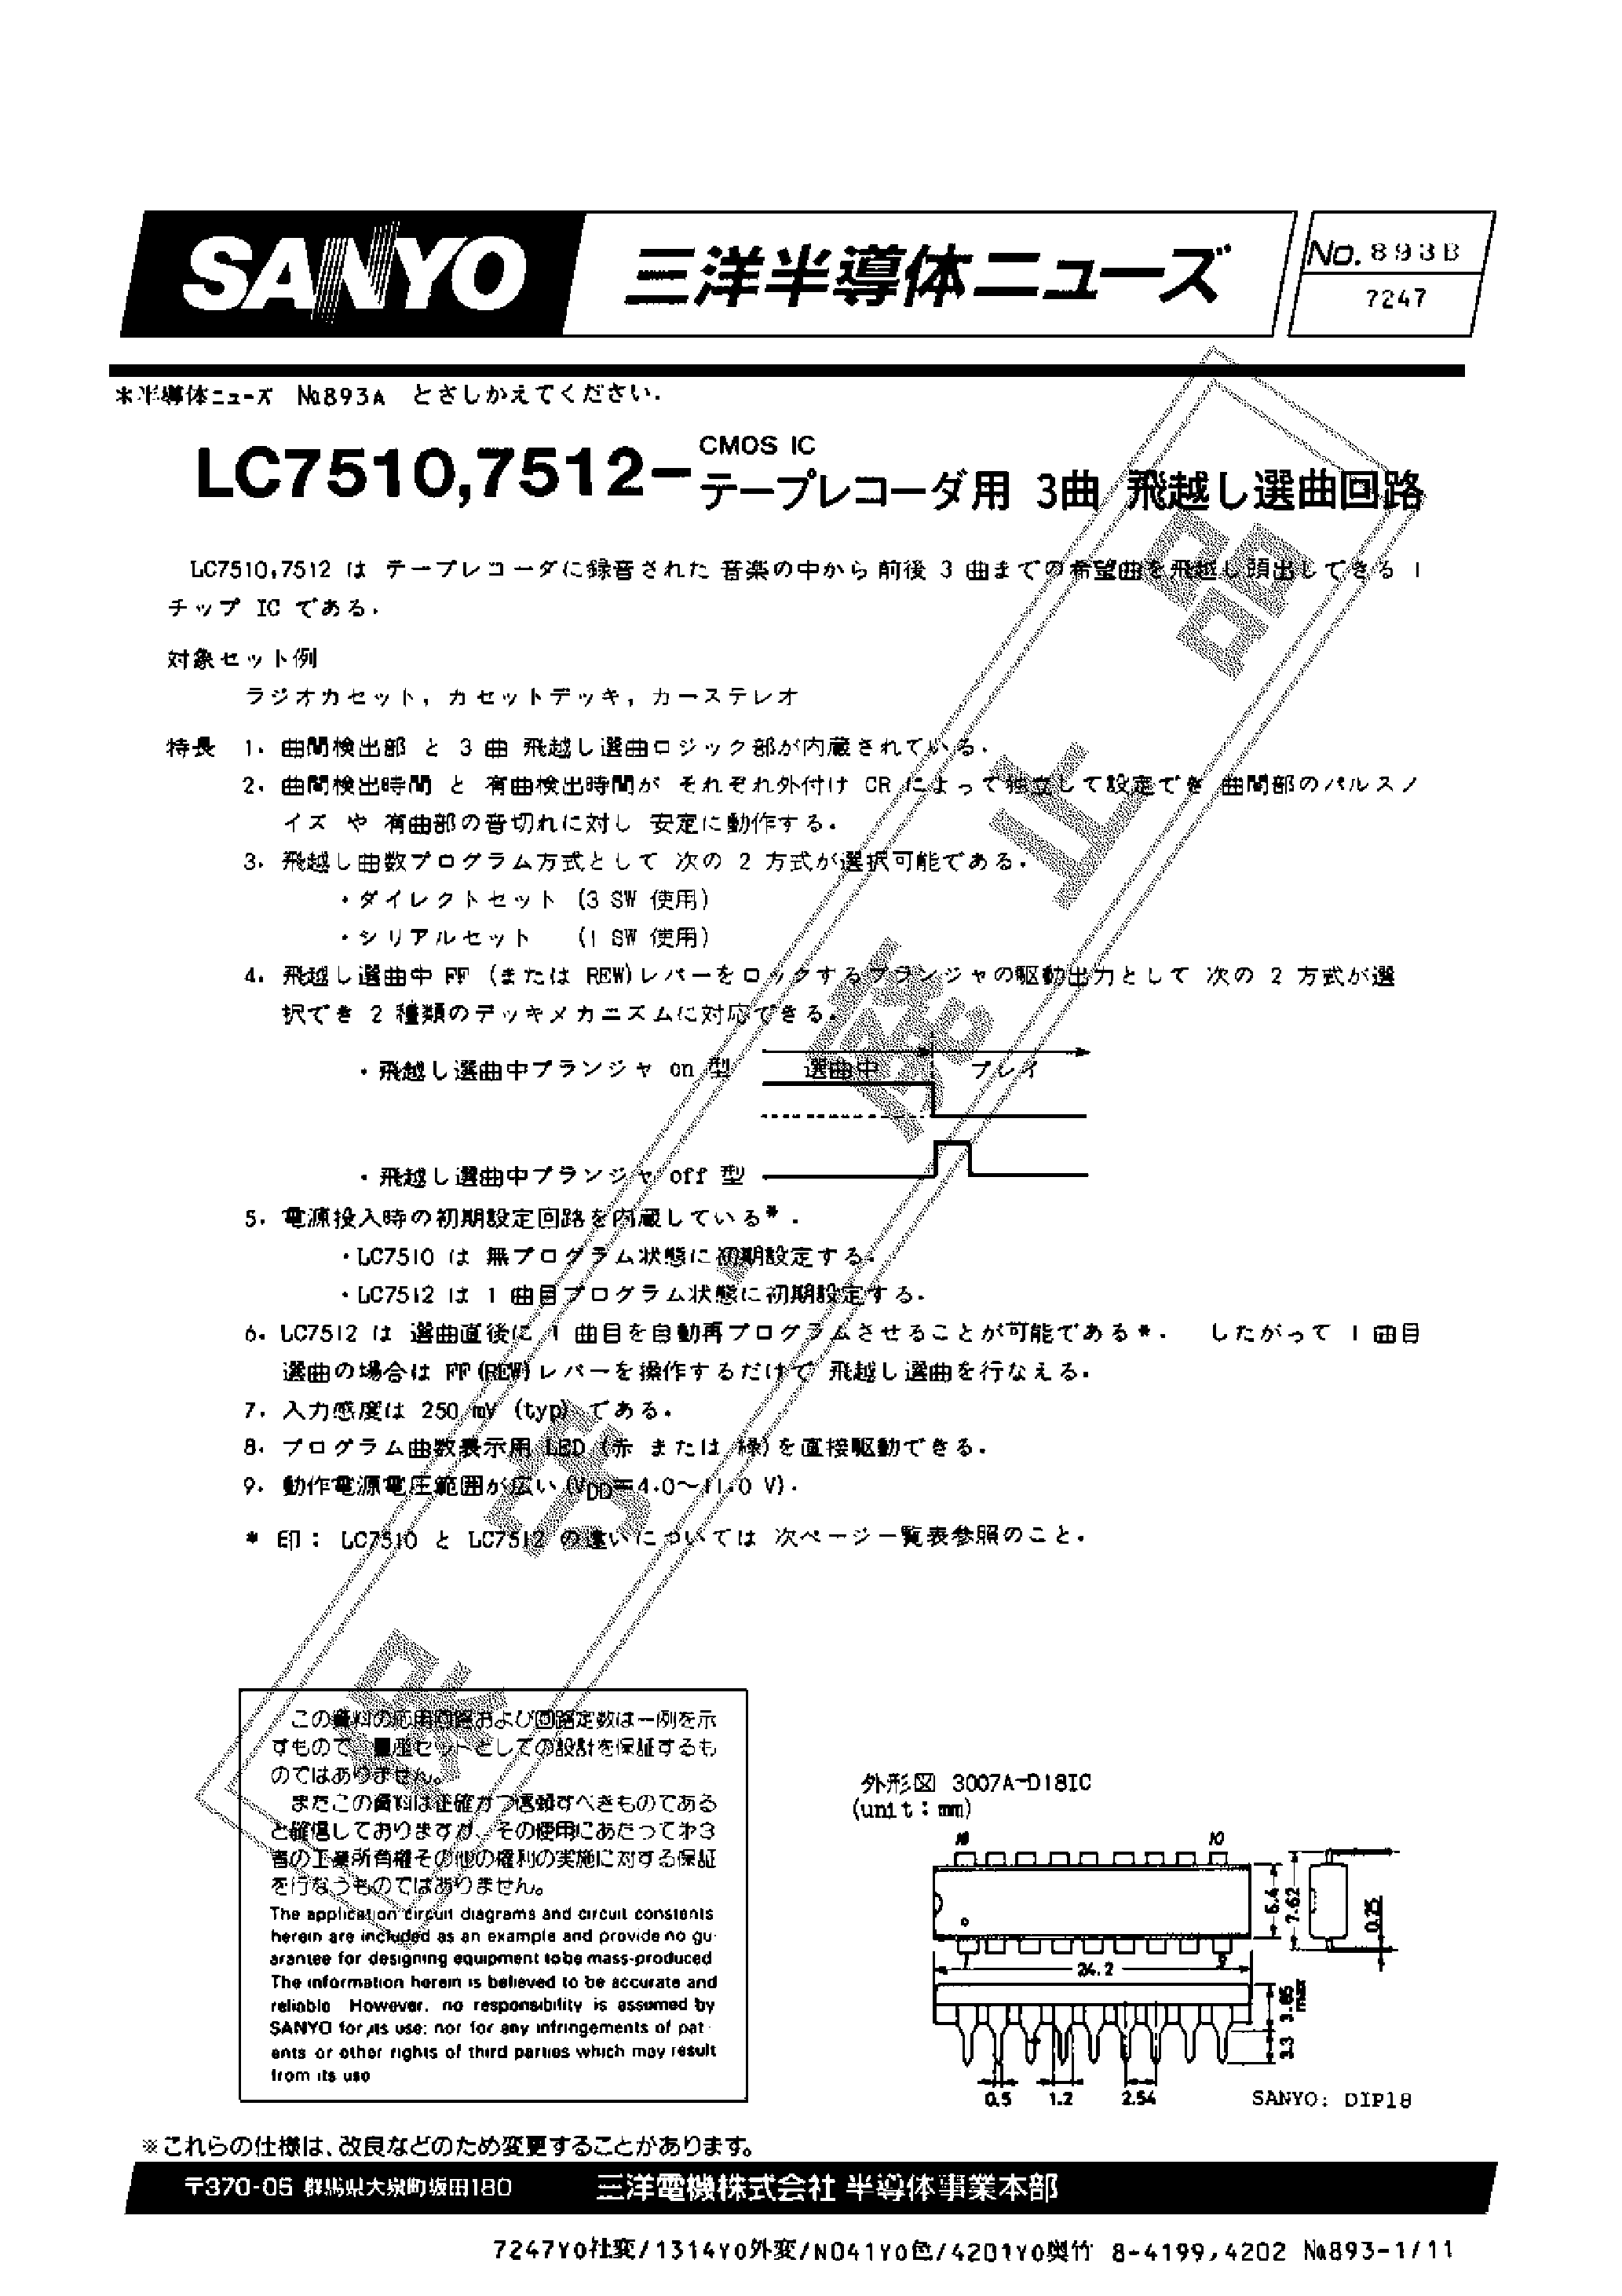 Даташит LC7510 - (LC7510) CMOS IC страница 1